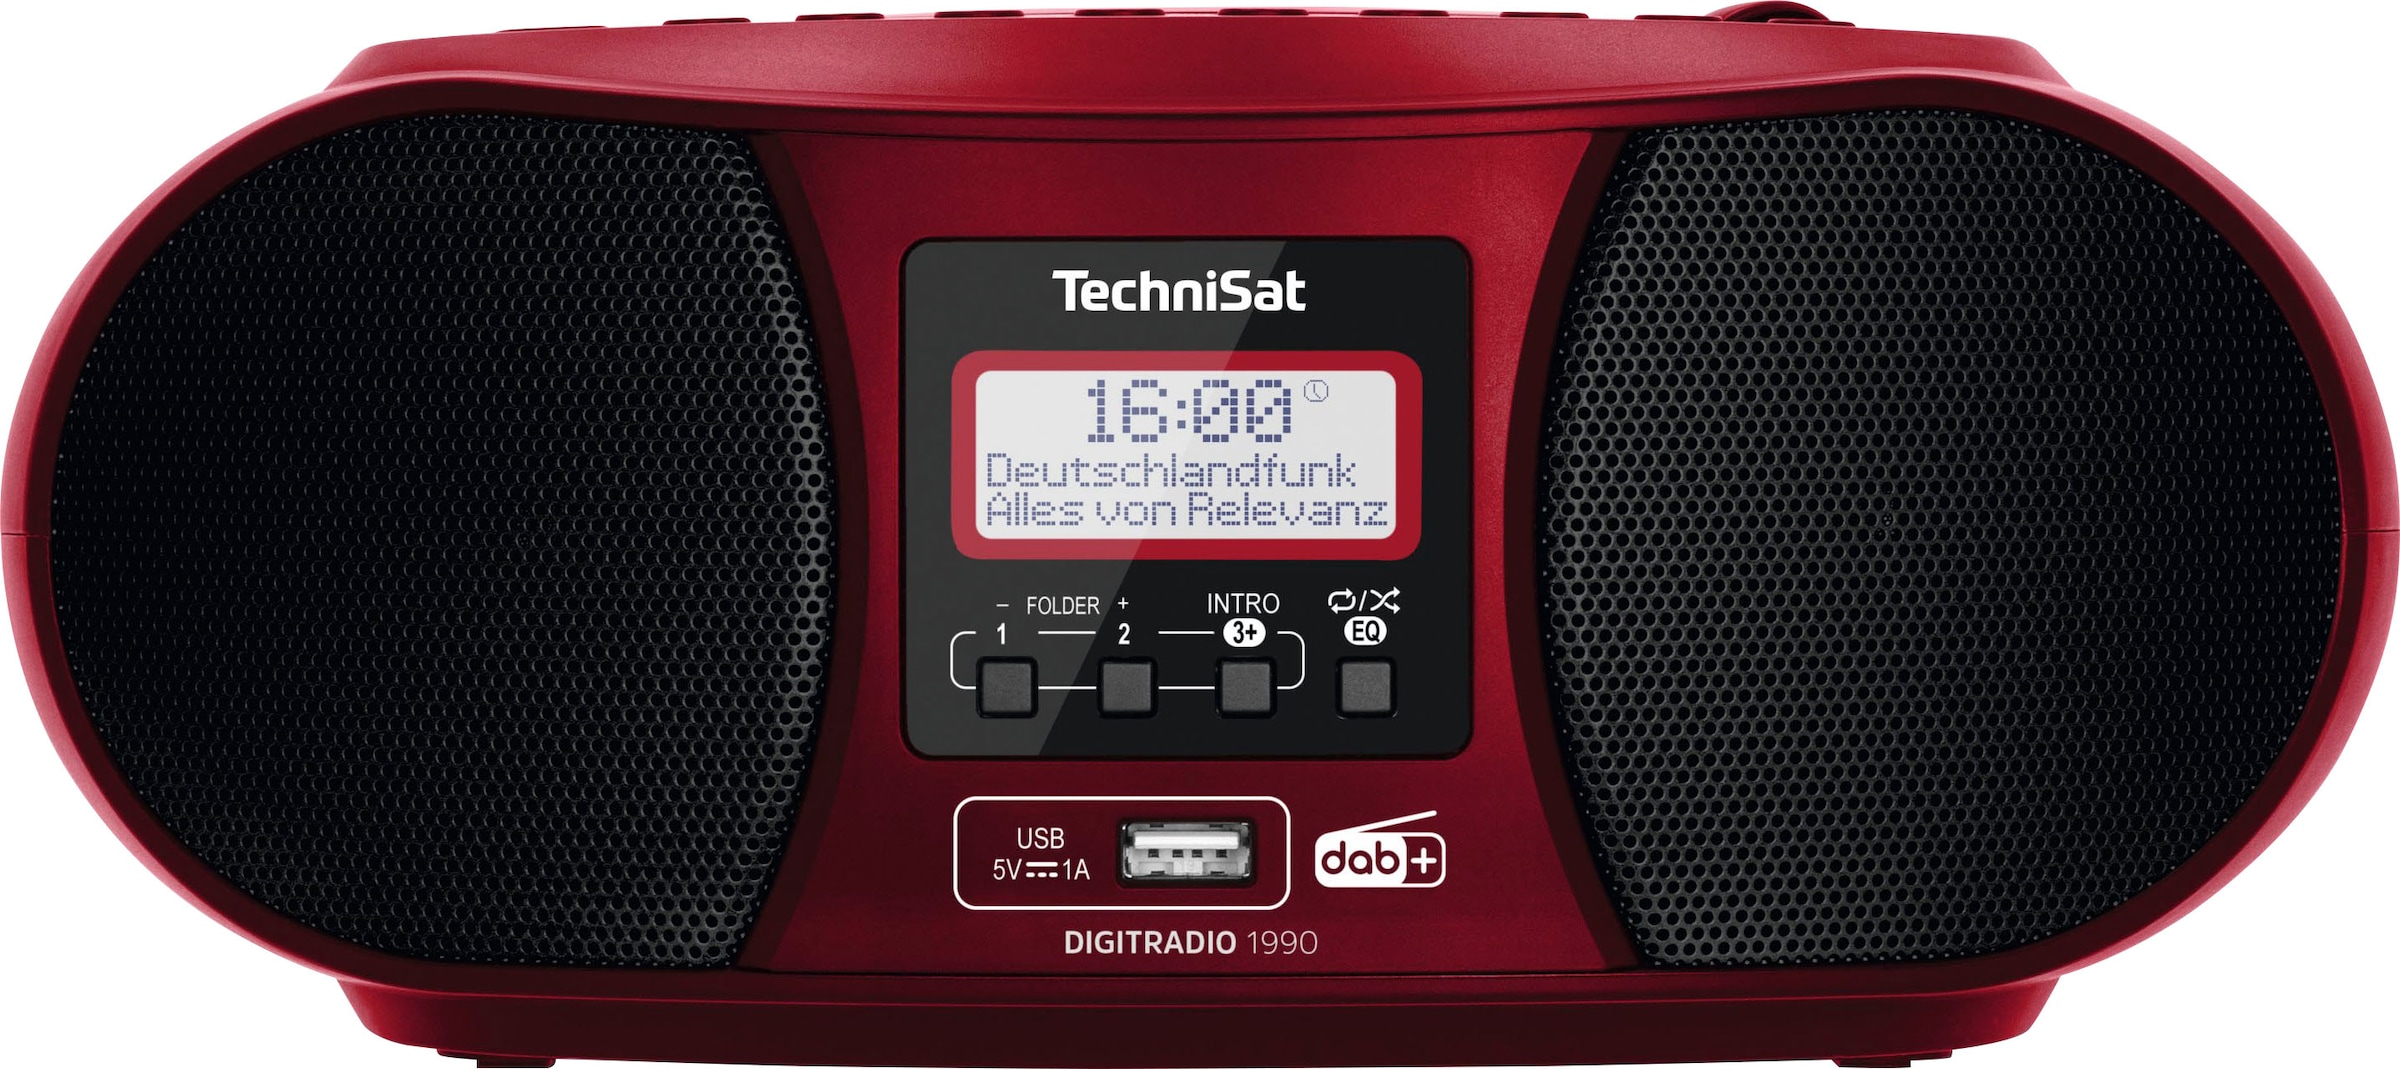 3 1990«, XXL UNIVERSAL Digitalradio | RDS (DAB+) »DIGITRADIO ➥ DAB+)-UKW Garantie (Bluetooth mit CD-Player W), Digitalradio TechniSat ( 3 Jahre